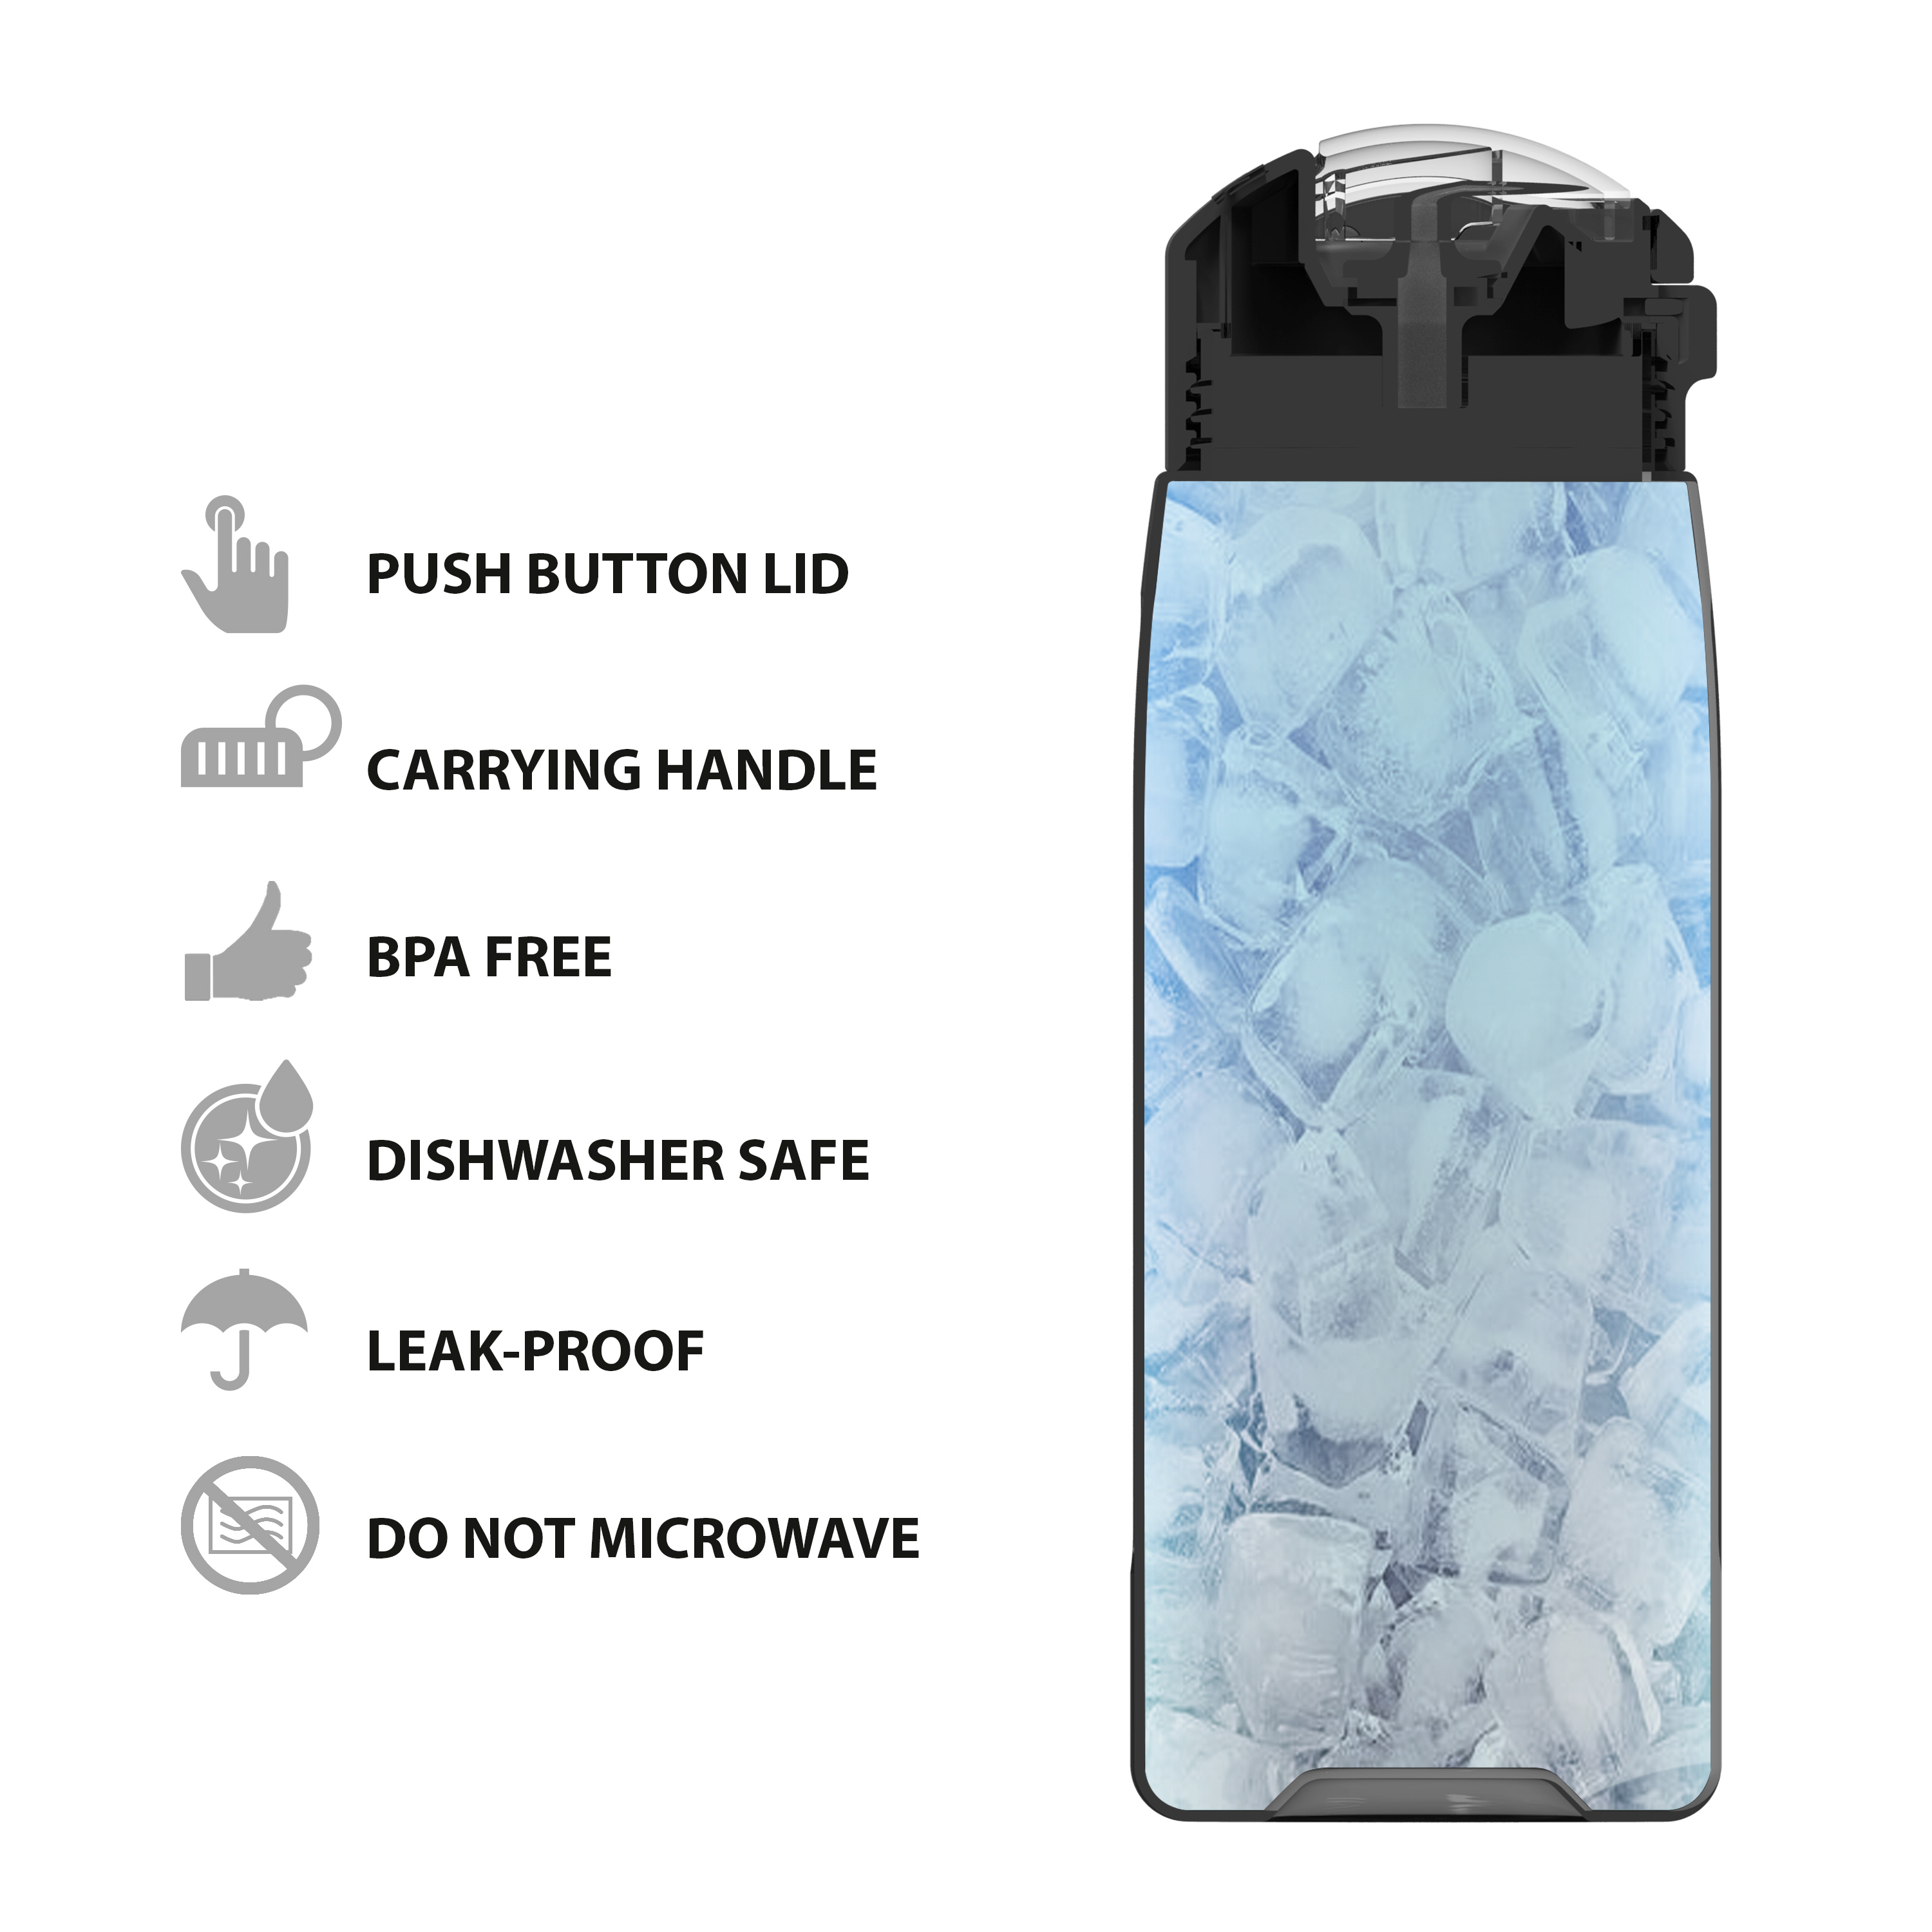 Genesis 32 ounce Reusable Plastic Water Bottle with Interchangeable Spouts, Charcoal slideshow image 6